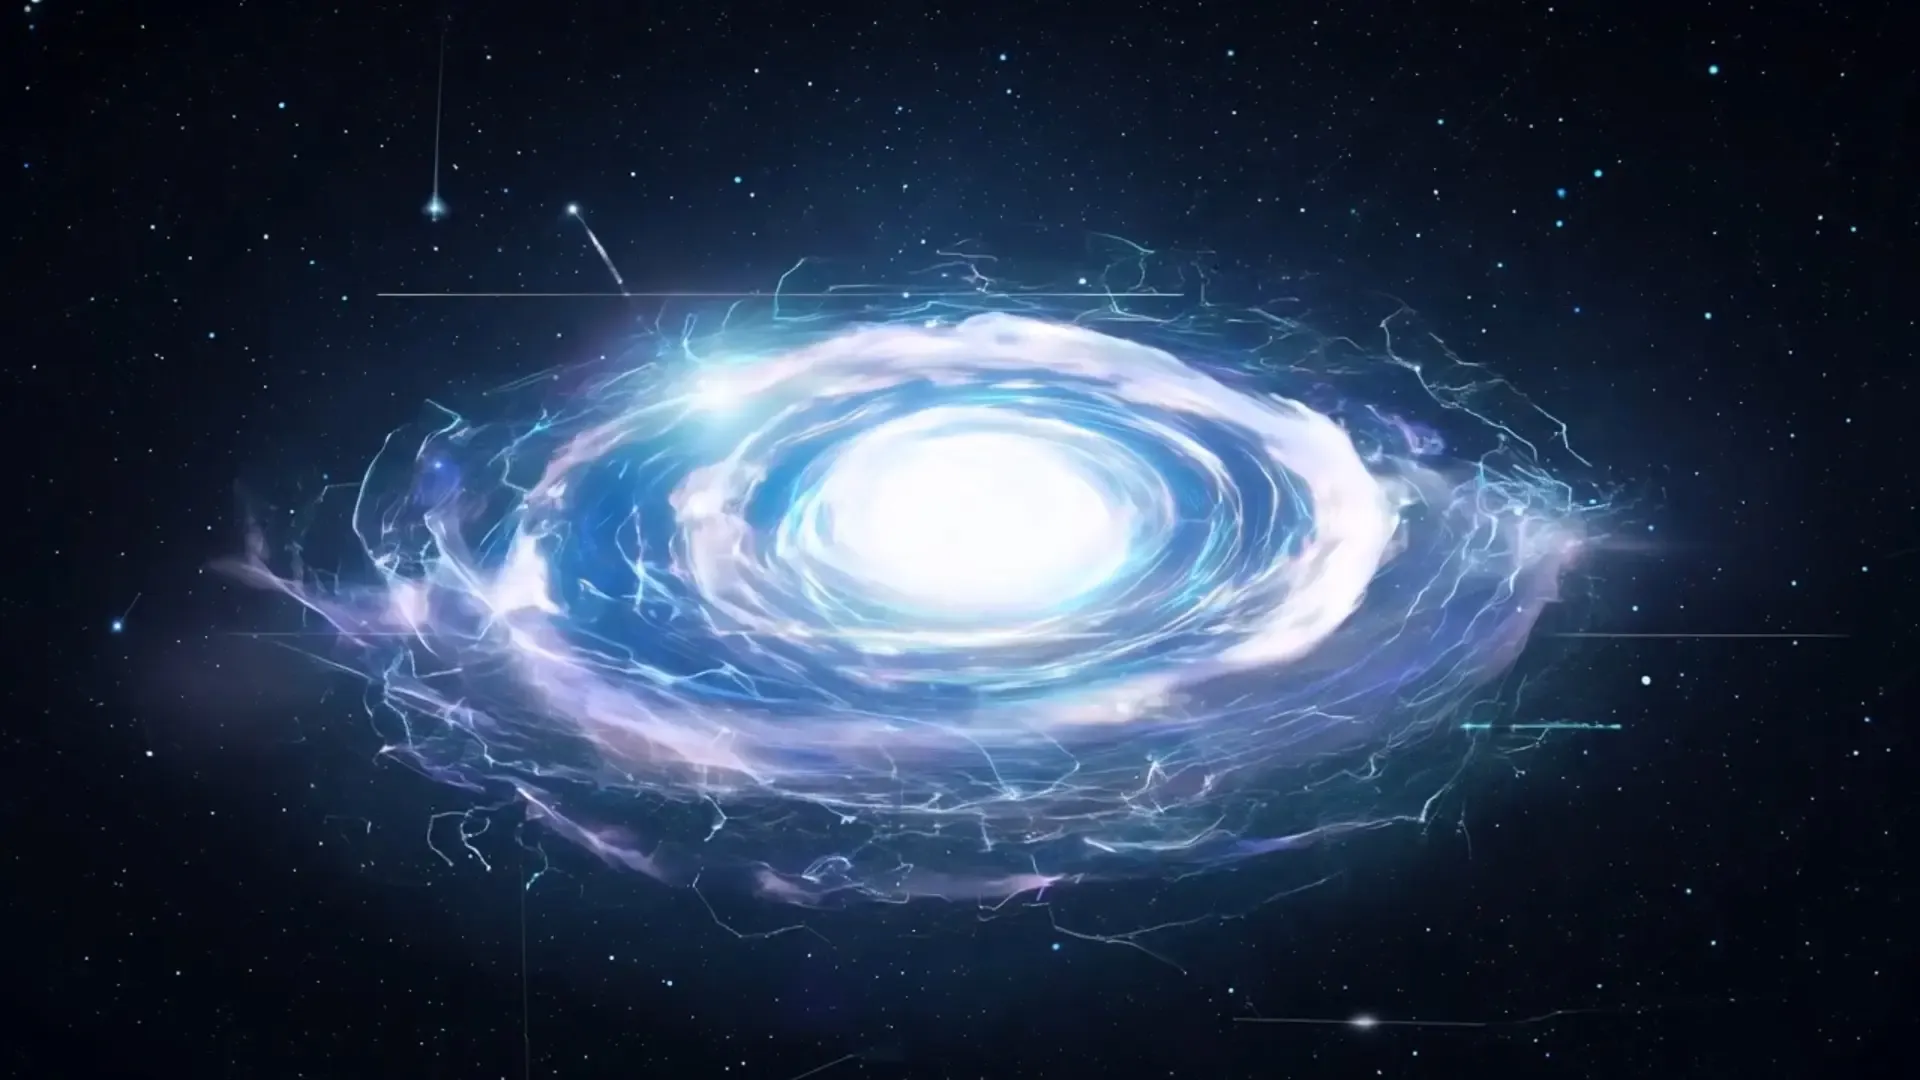 Interstellar Phenomenon Background for Science Fiction Themes